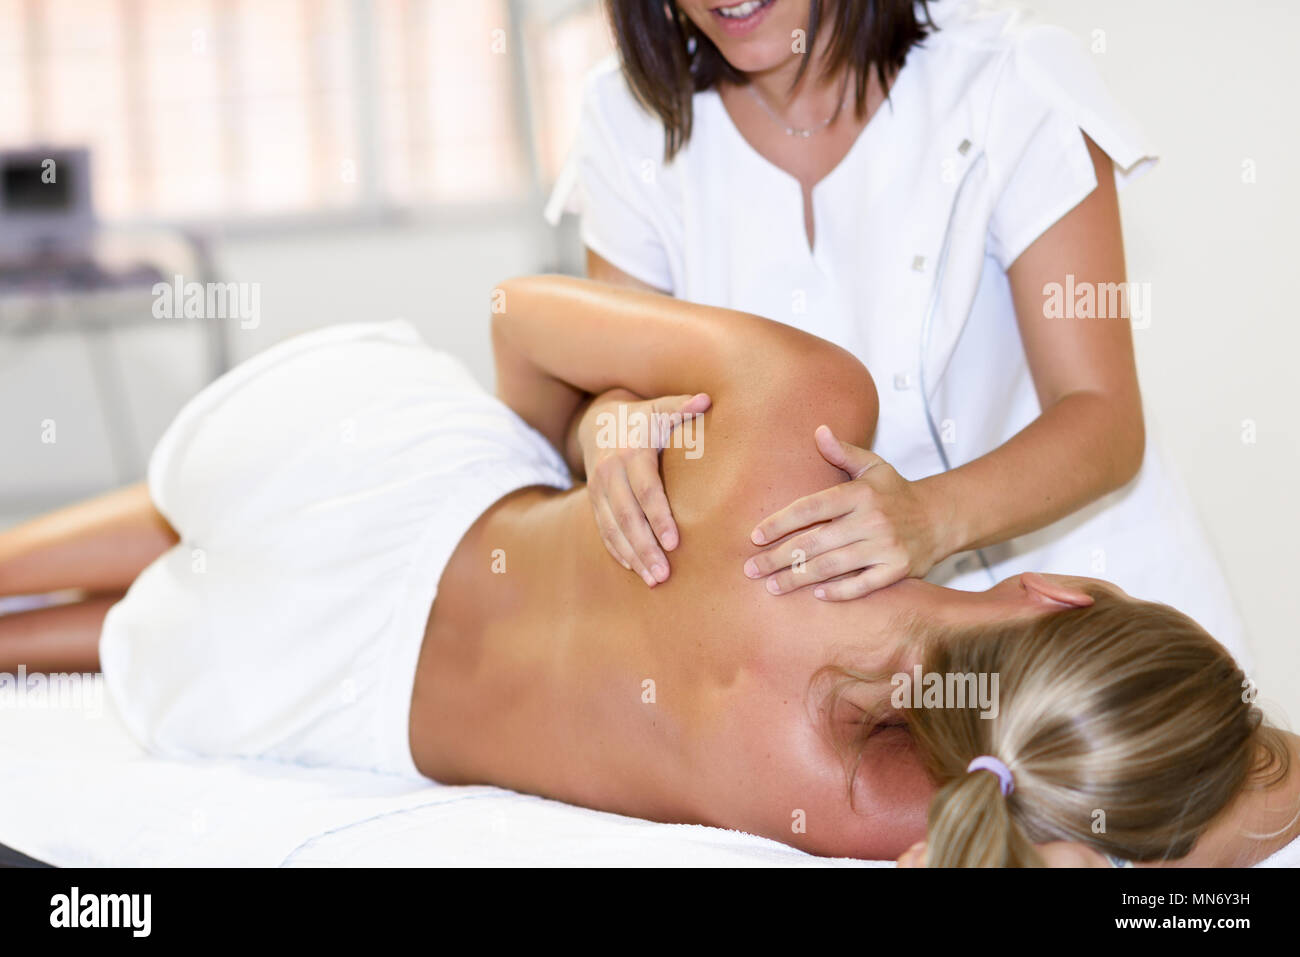 A woman giving a man shoulder massage Stock Photo - Alamy